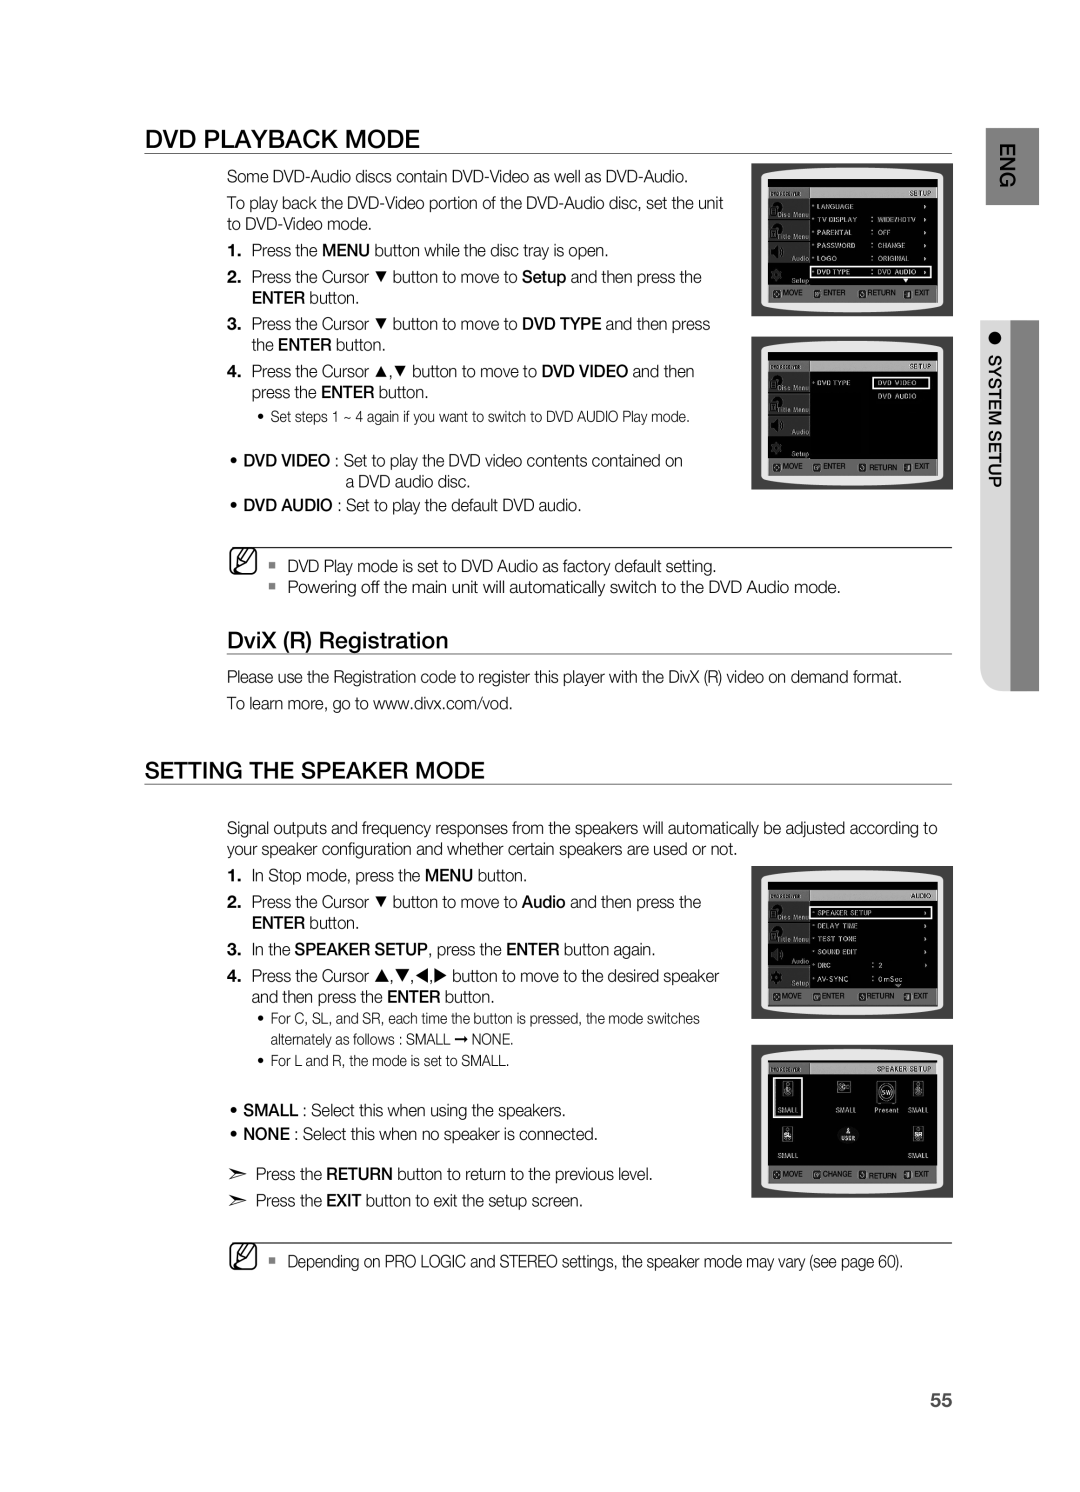 Samsung HT-TWZ415 user manual DVD Playback Mode, DviX R Registration, Setting the Speaker Mode 